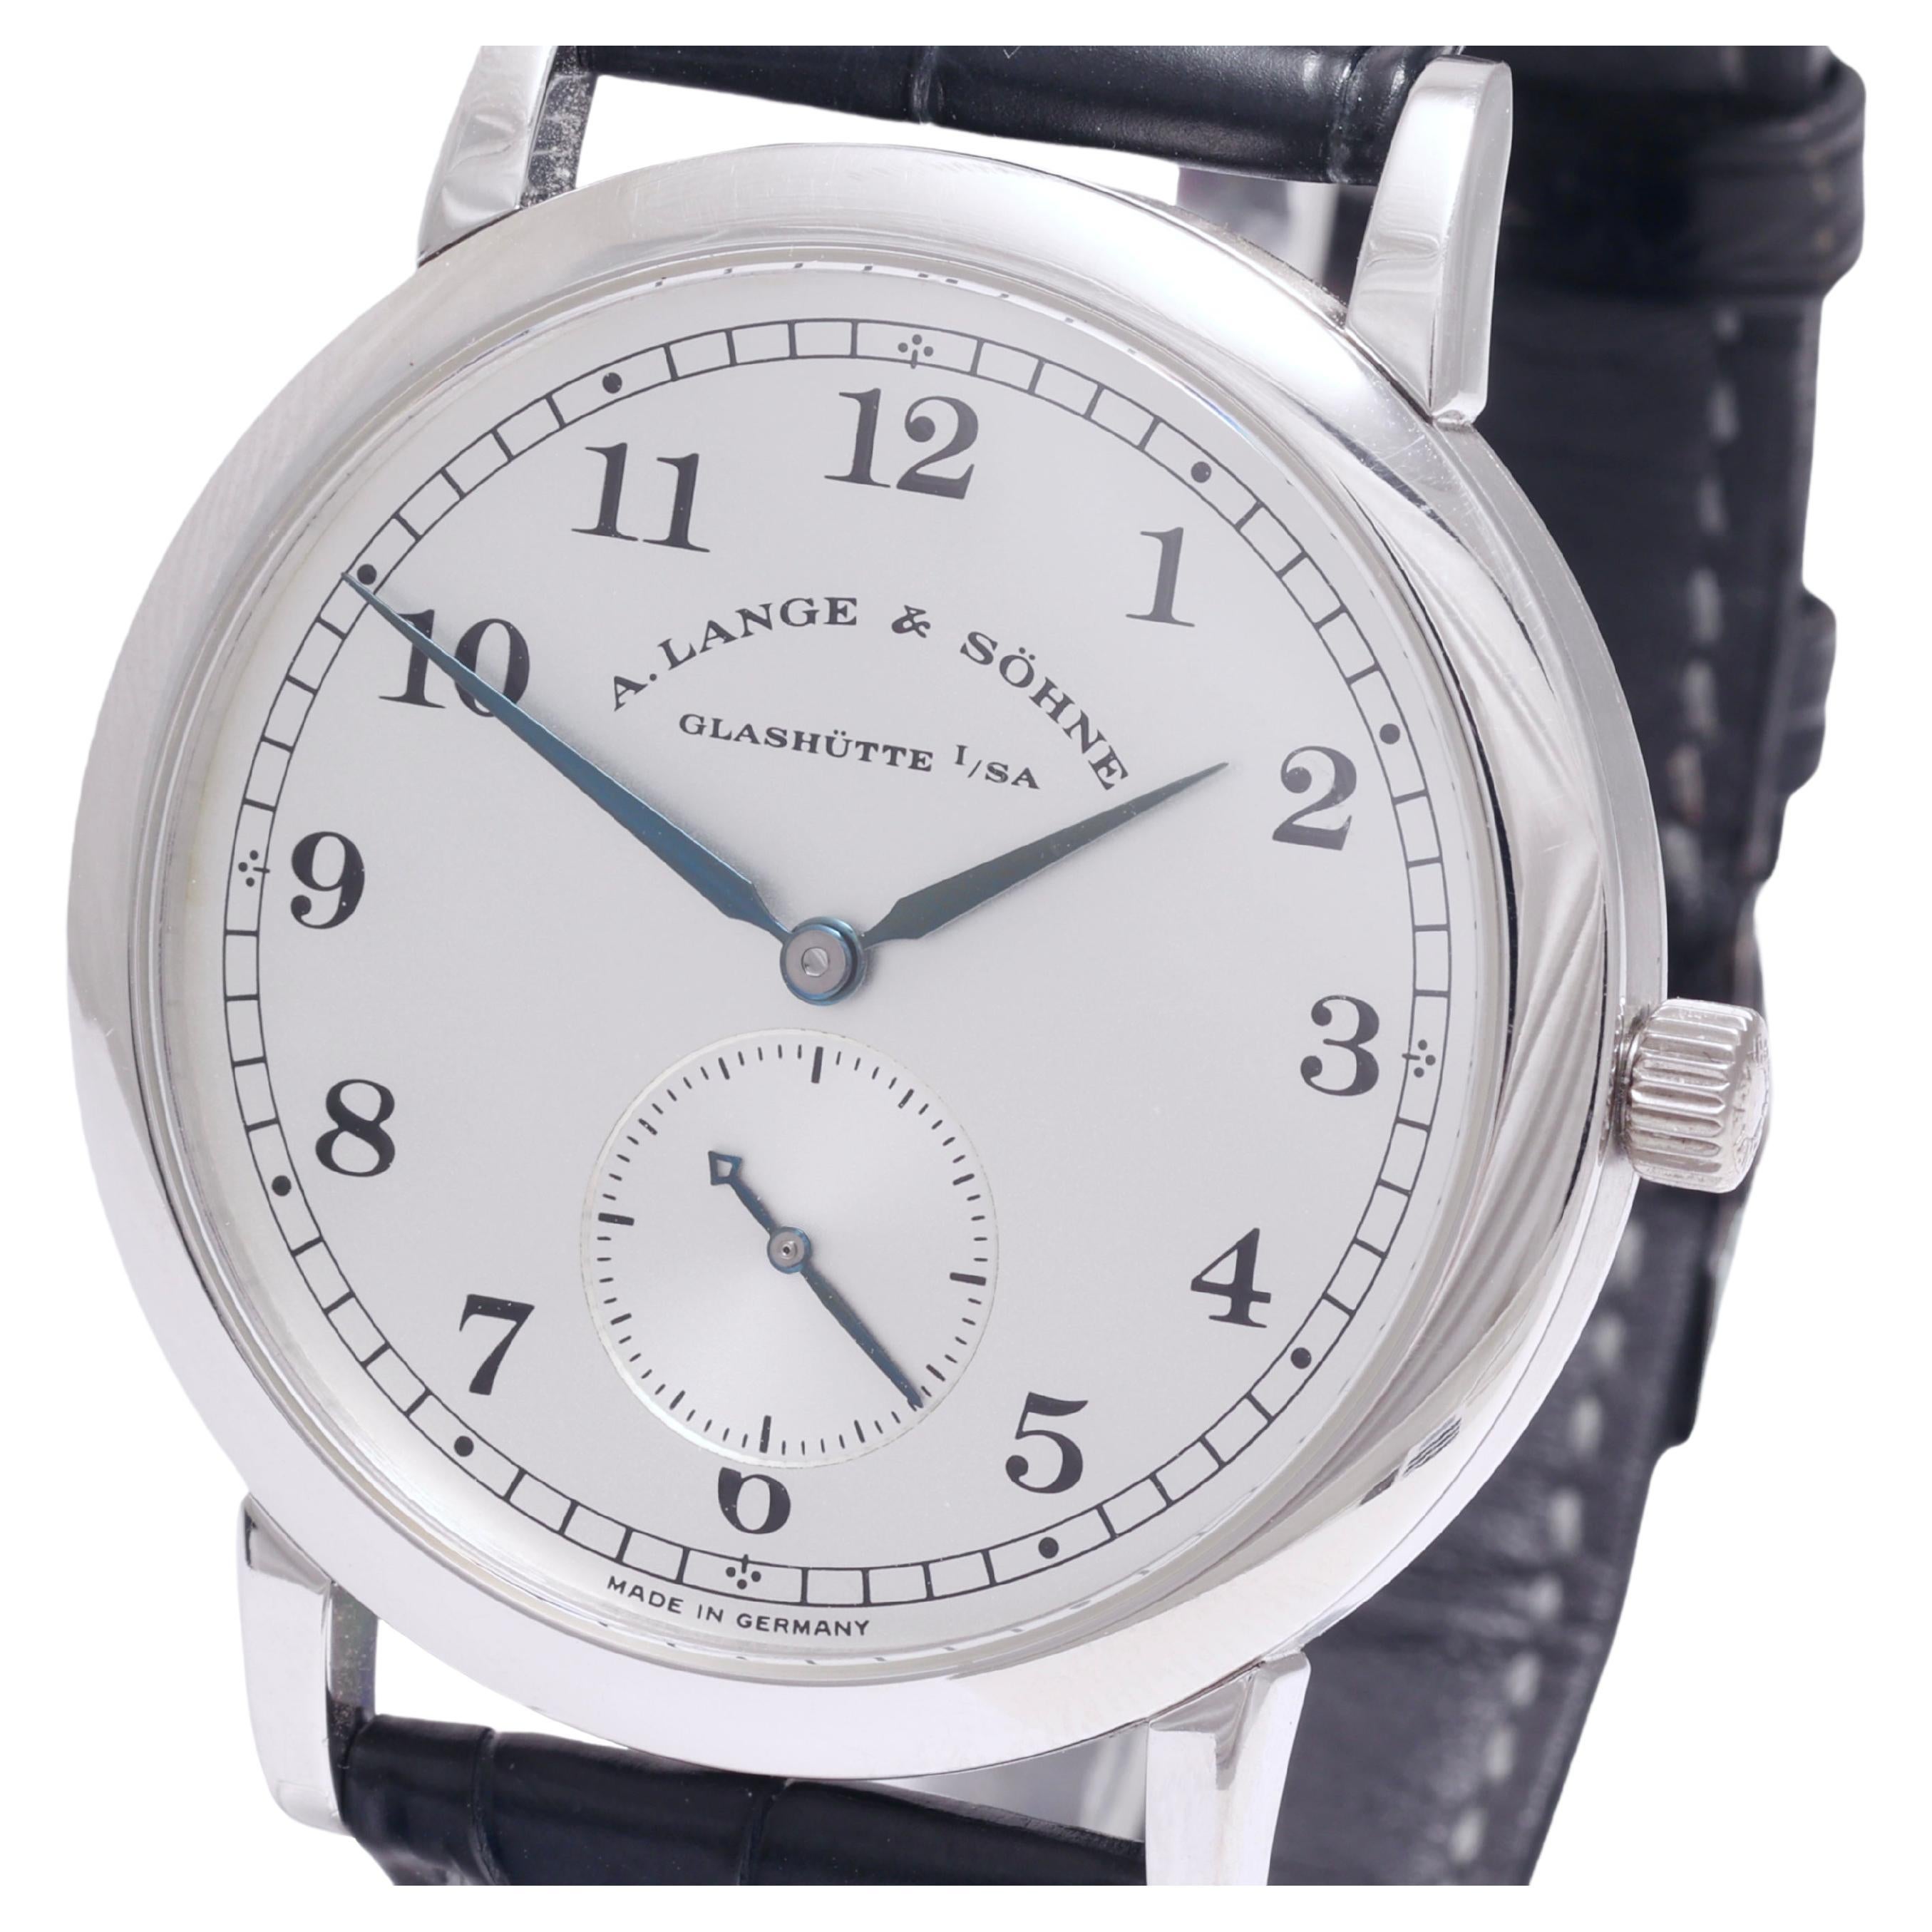 Platinum Lange Sohn 1815 Wrist Watch With Lange Certificate Like New, Rare and very Collectable

Mouvement : Remontage manuel

Numéro de référence : 206.025

Boîtier : Platine 36 mm